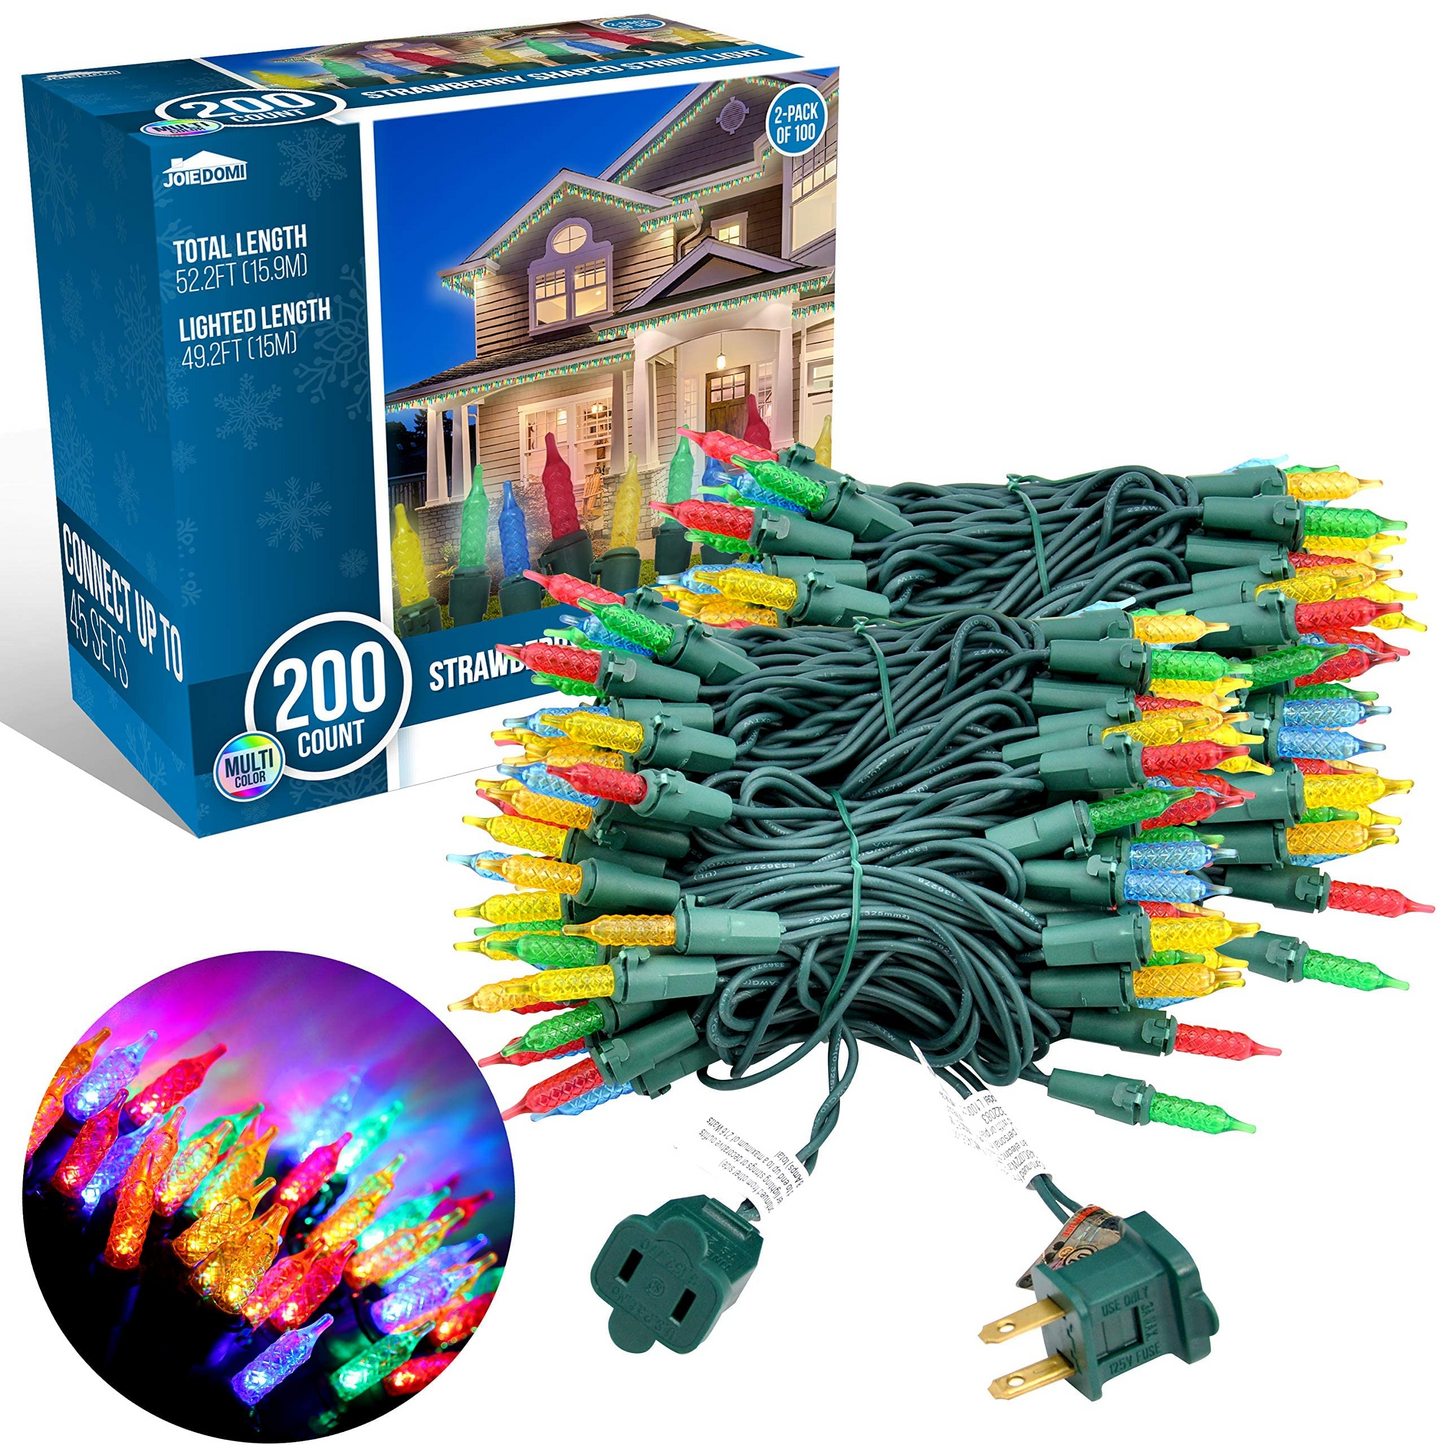 2 Sets of 100 LED Multi Color Christmas Light